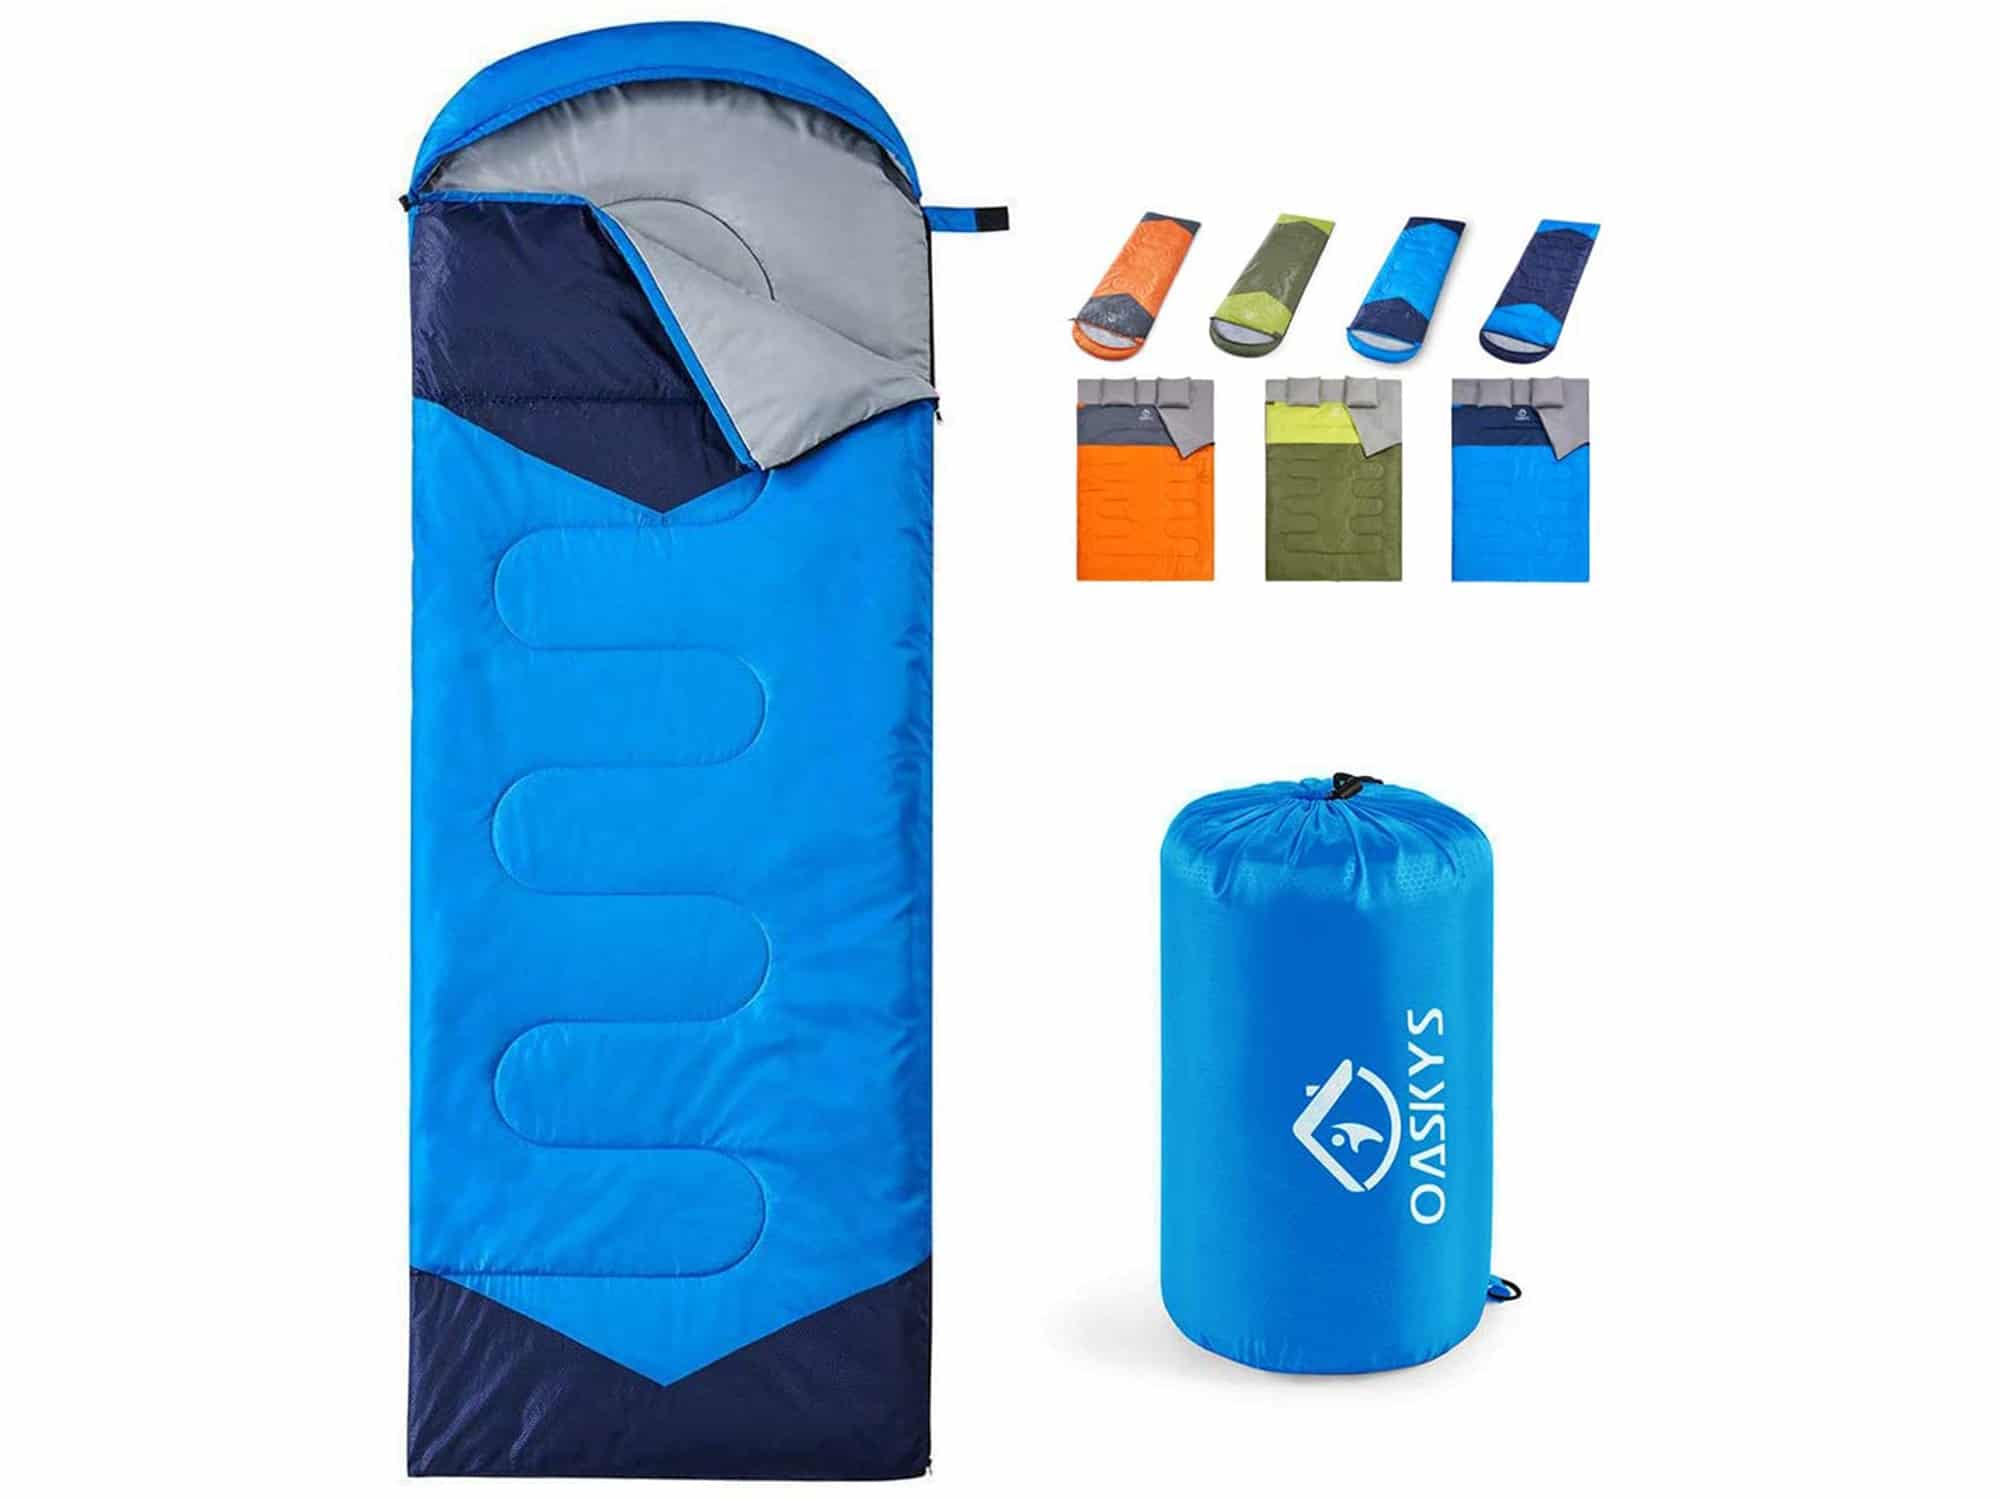 oaskys sleeping bag